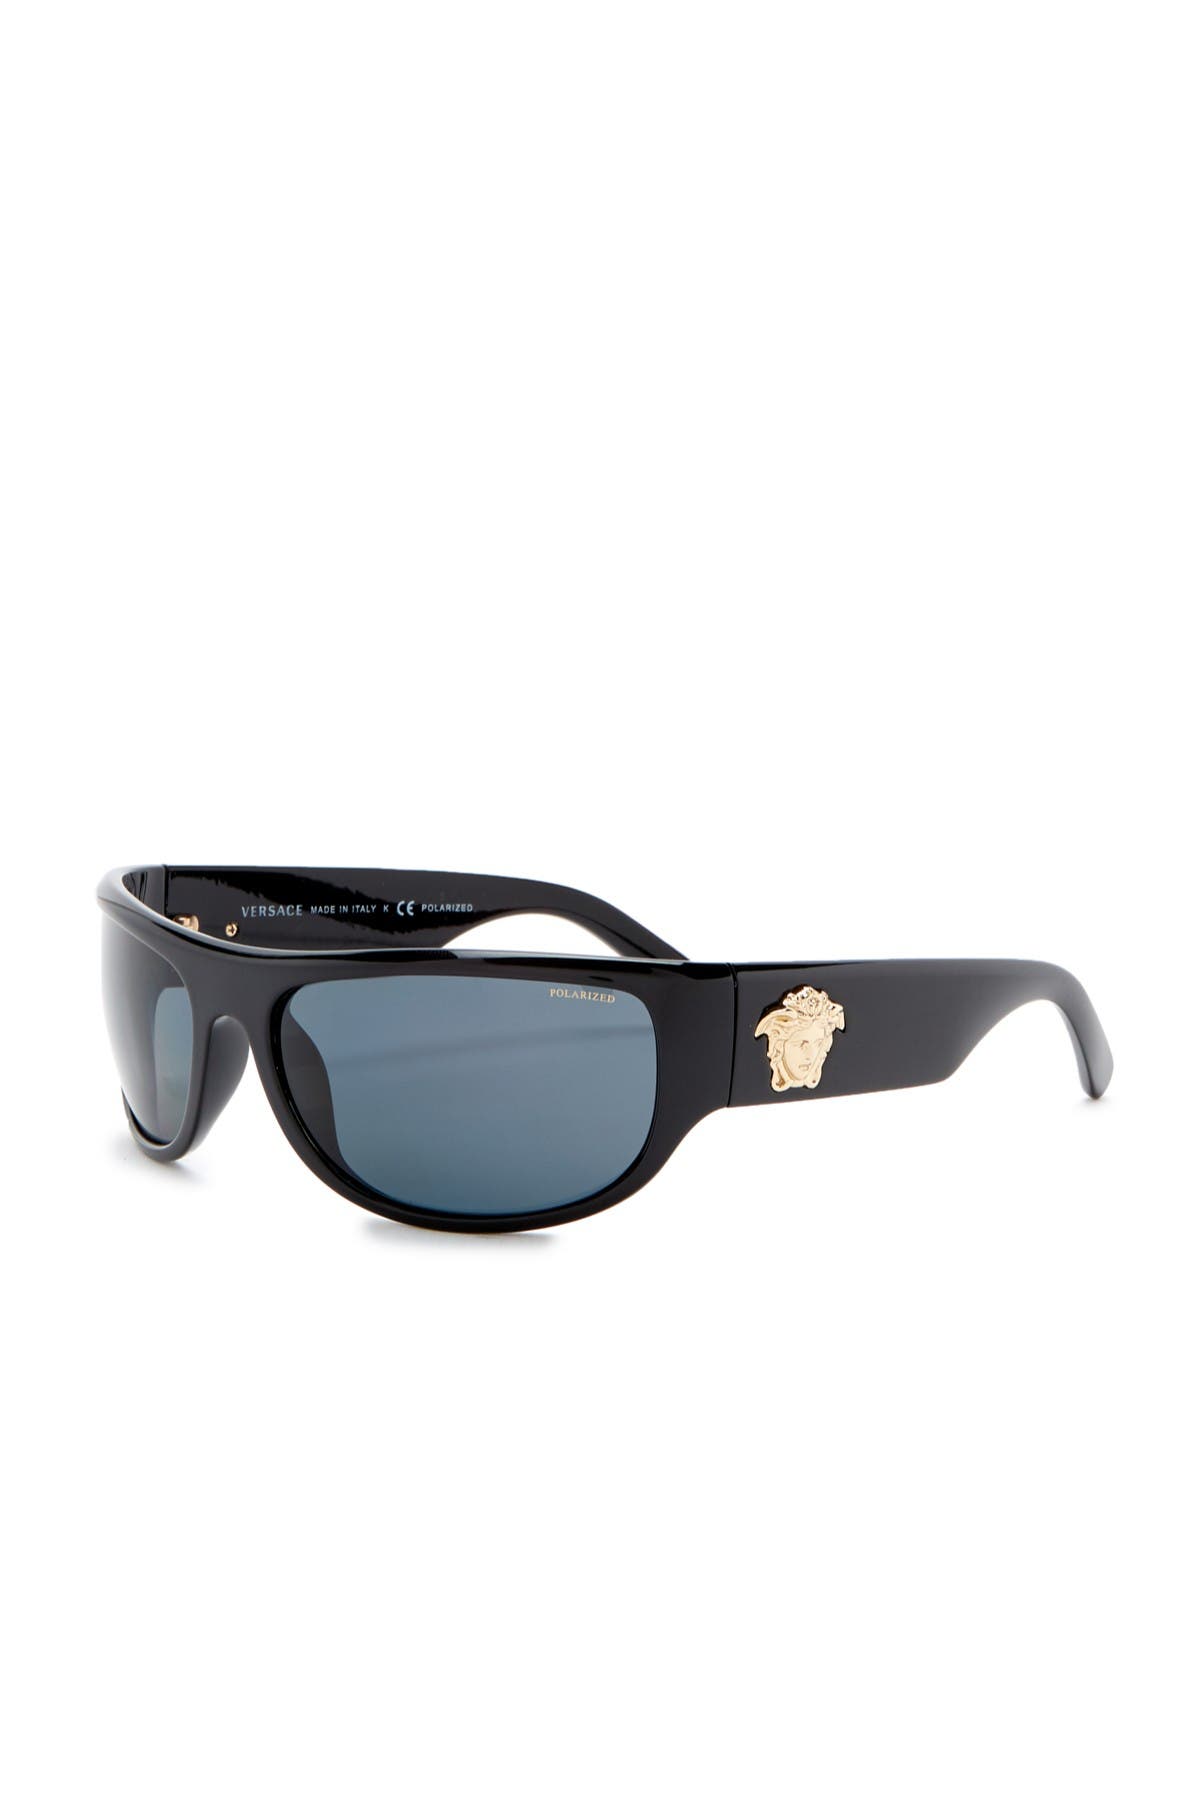 versace rectangle 63mm sunglasses